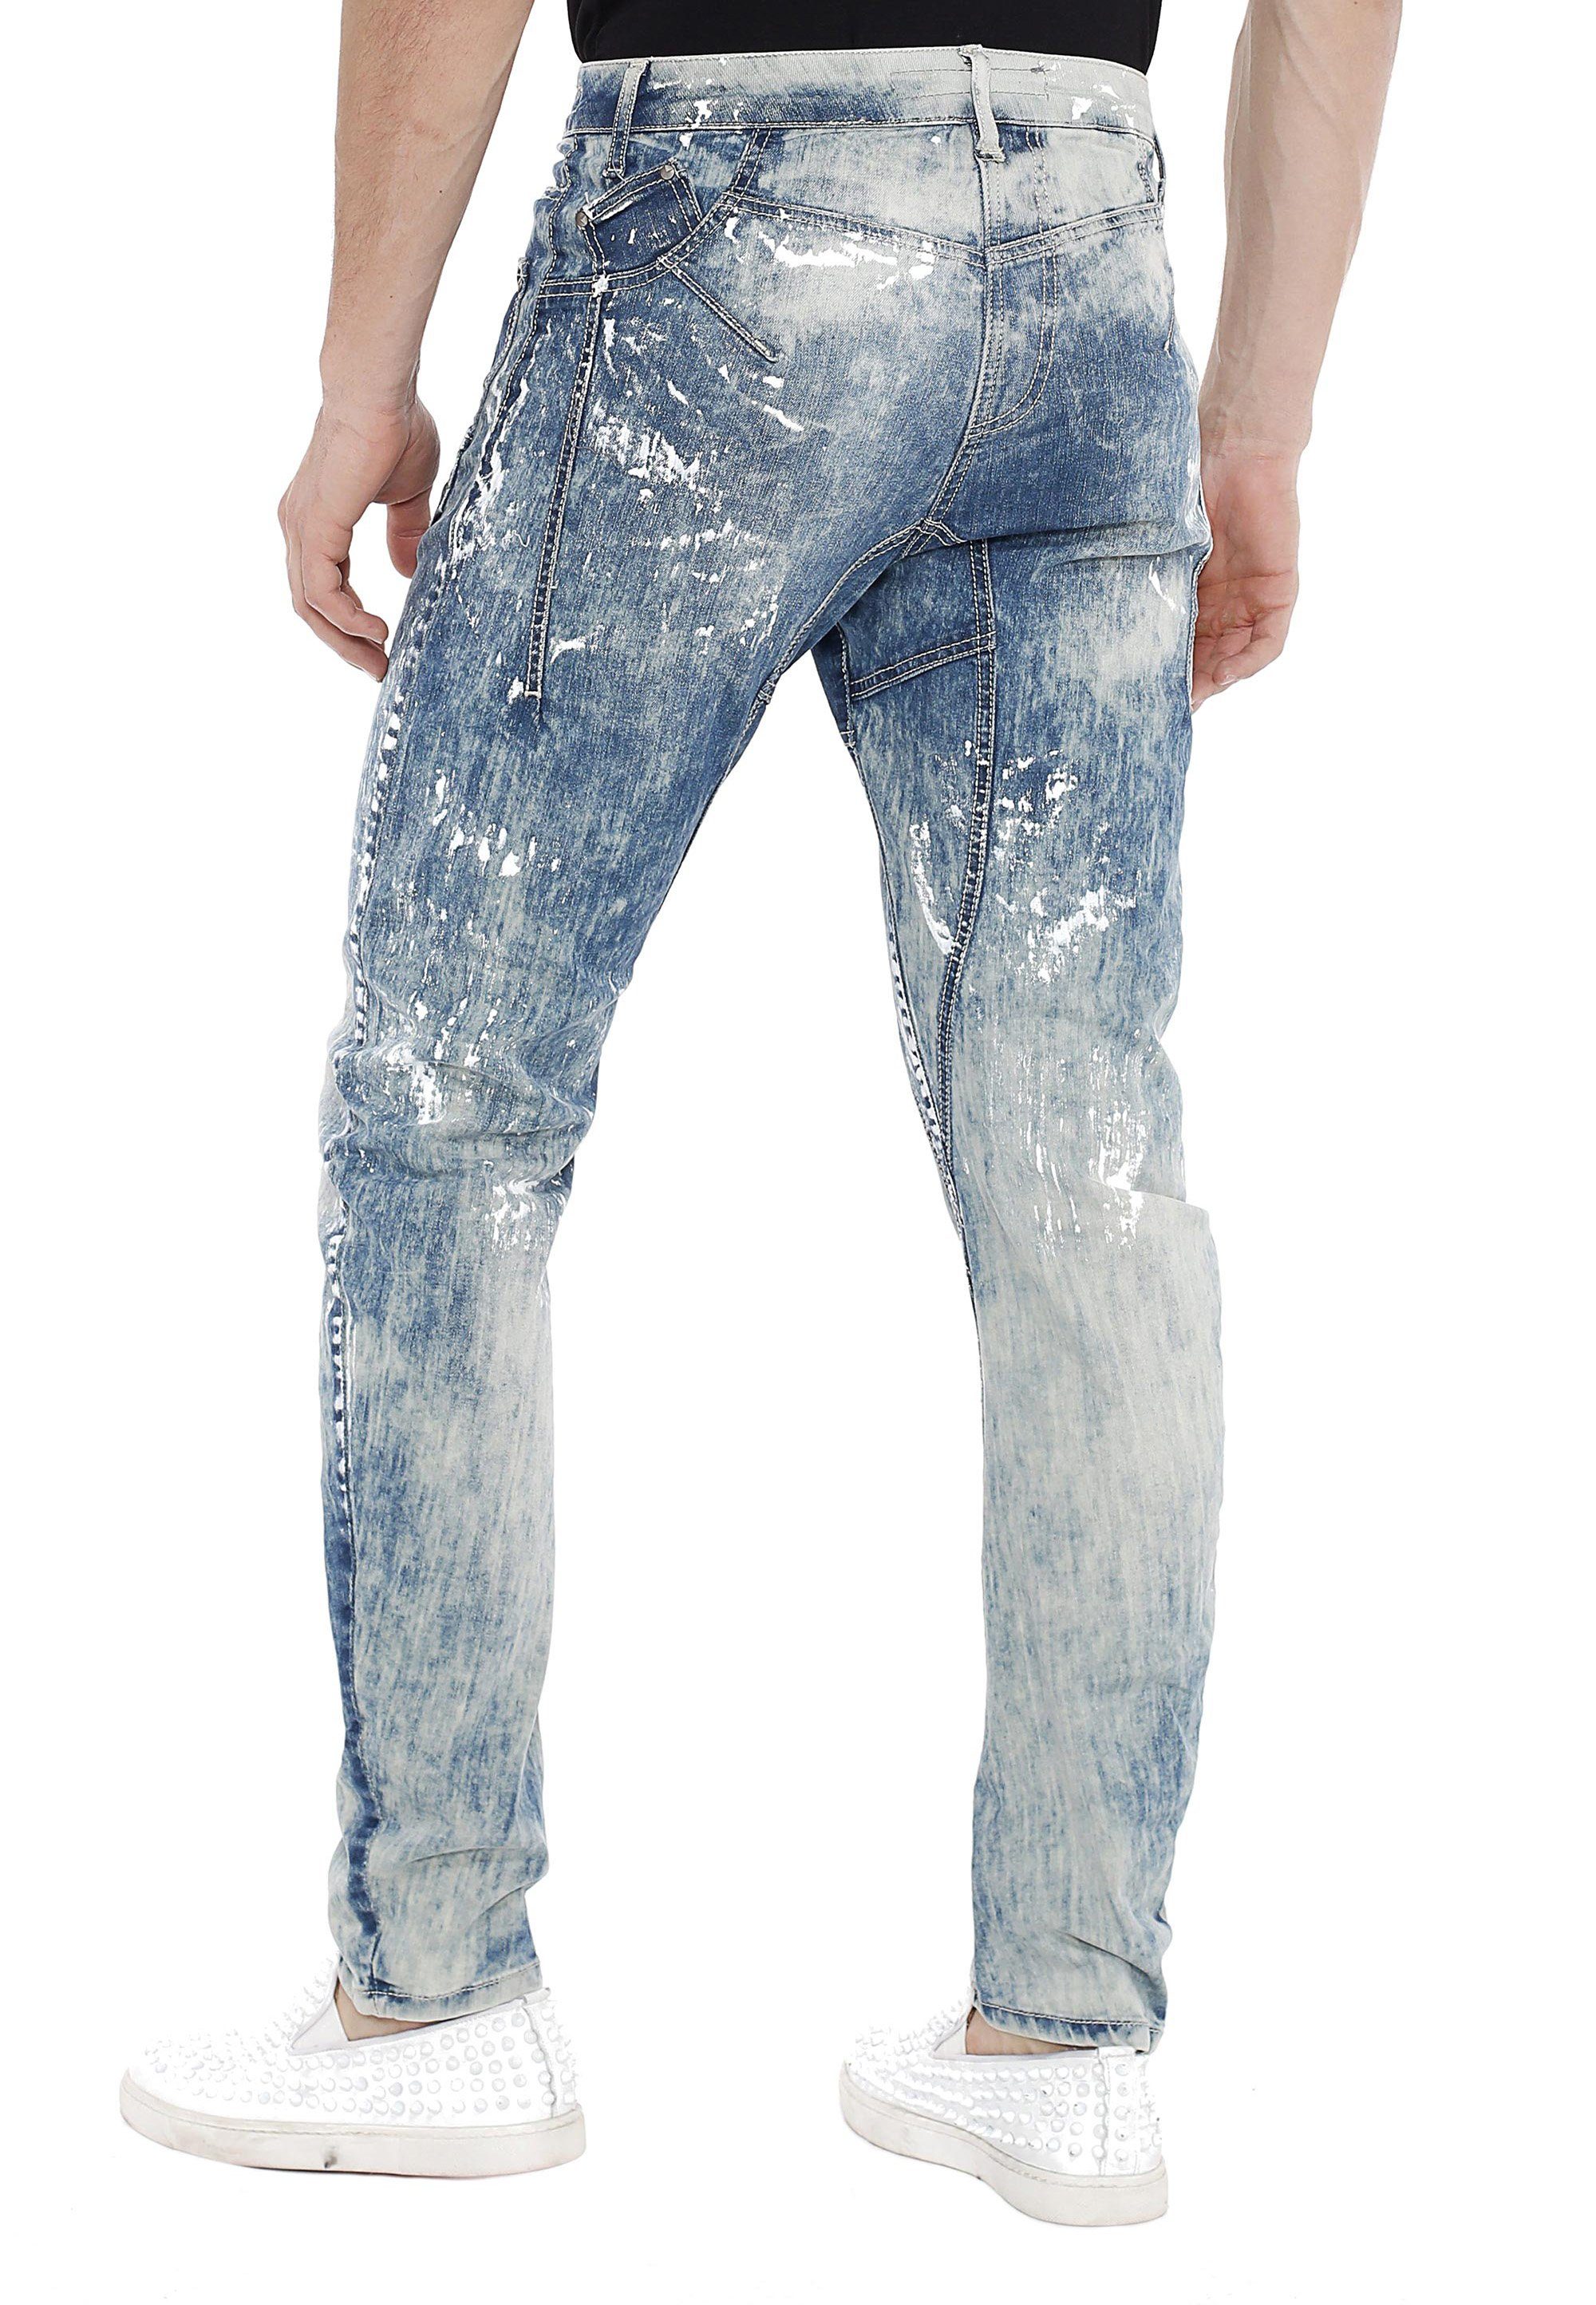 Cipo & Baxx Bequeme Jeans coolen mit Farbspots